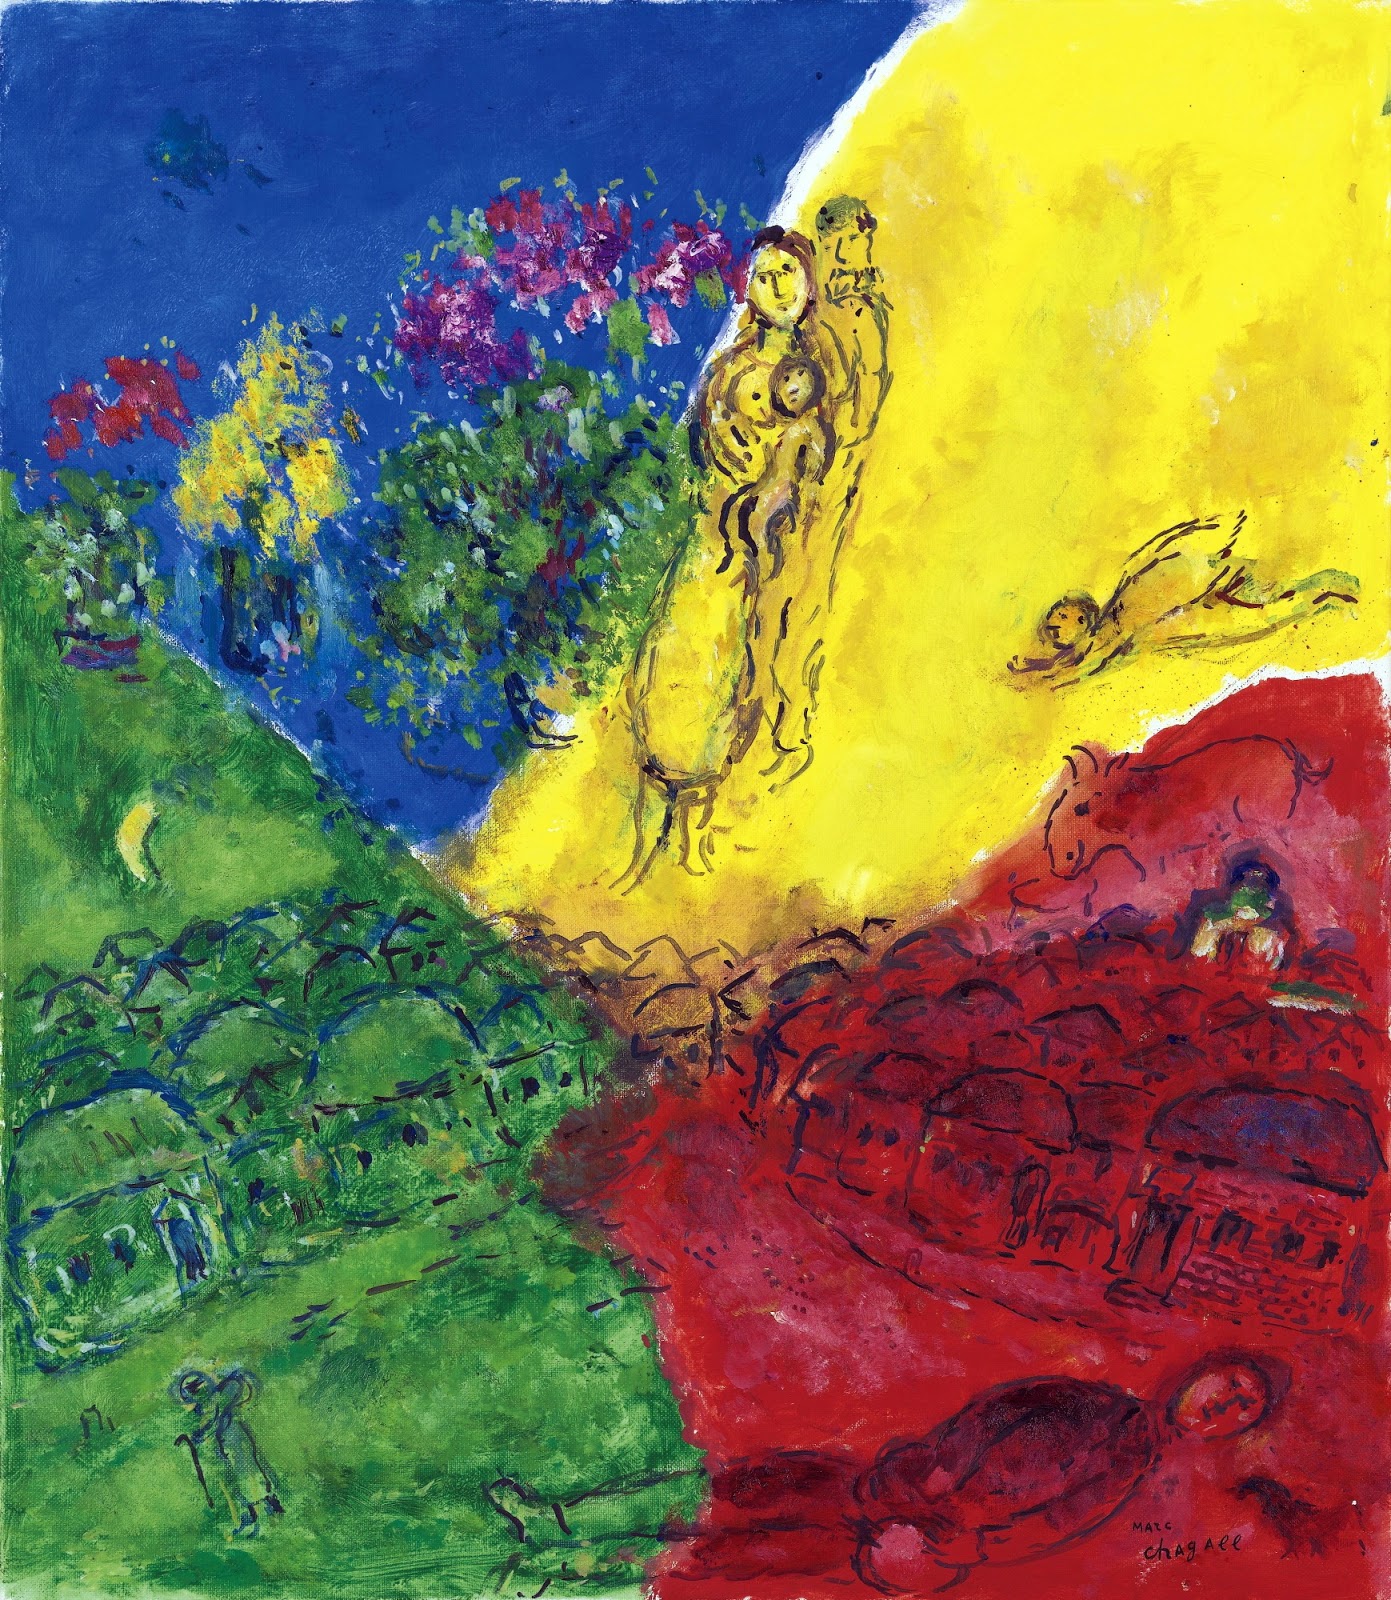 Marc+Chagall-1887-1985 (290).jpg